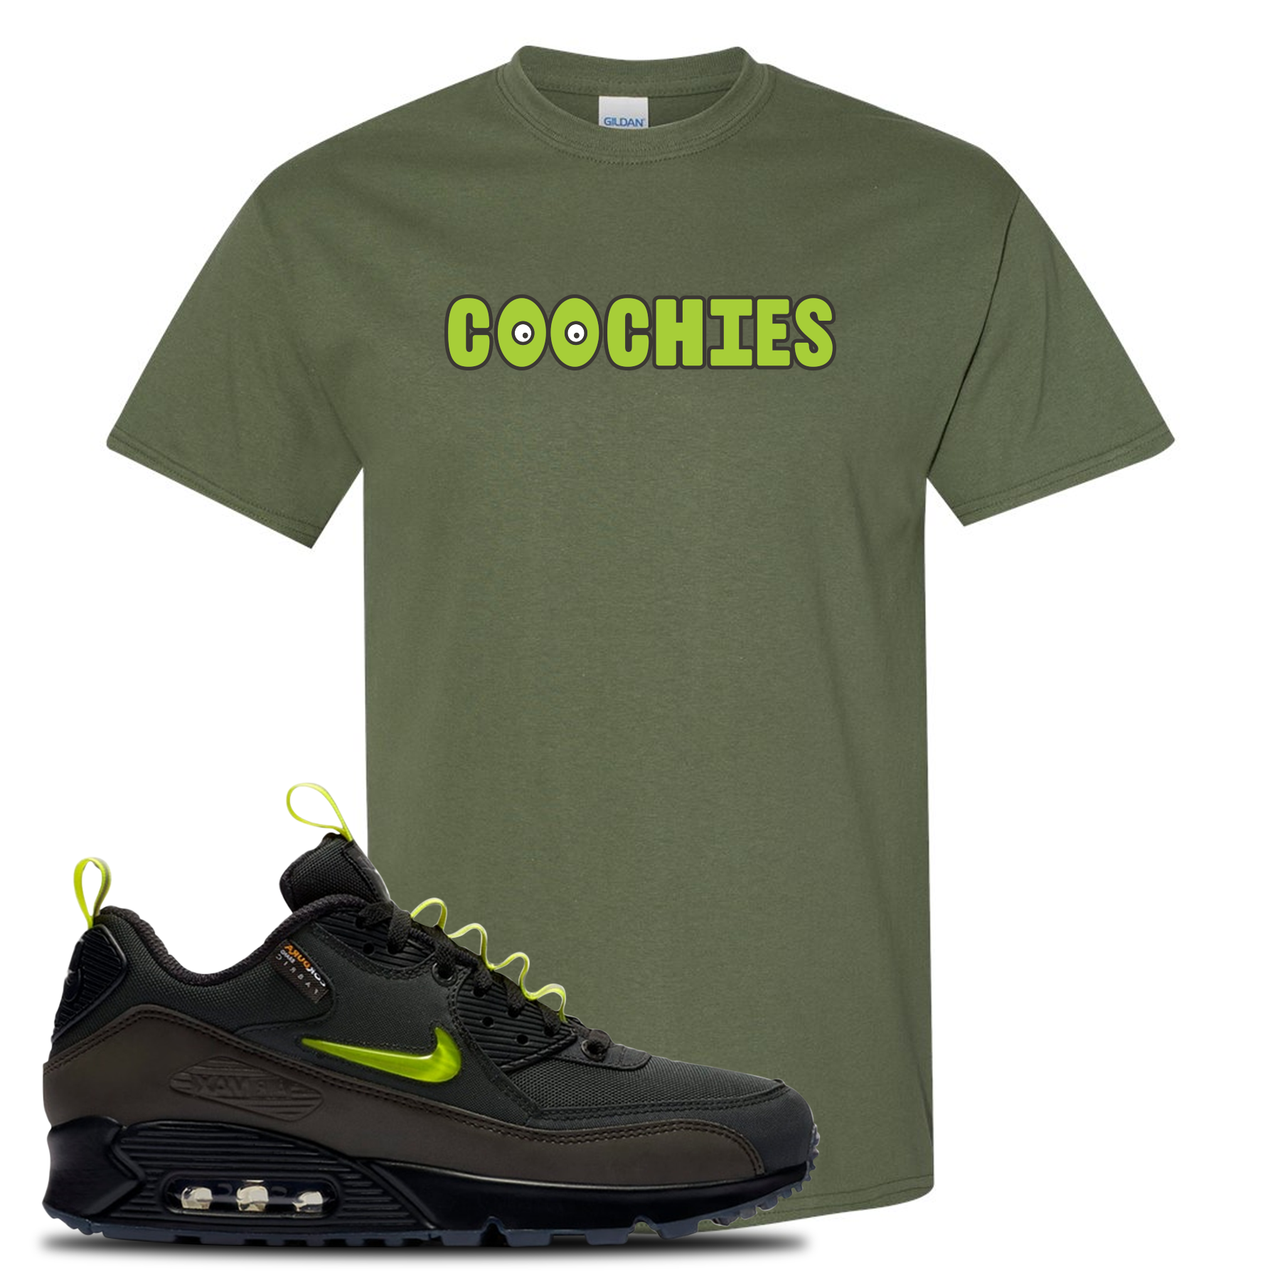 The Basement X Air Max 90 Manchester Coochies Military Green Sneaker Hook Up T-Shirt